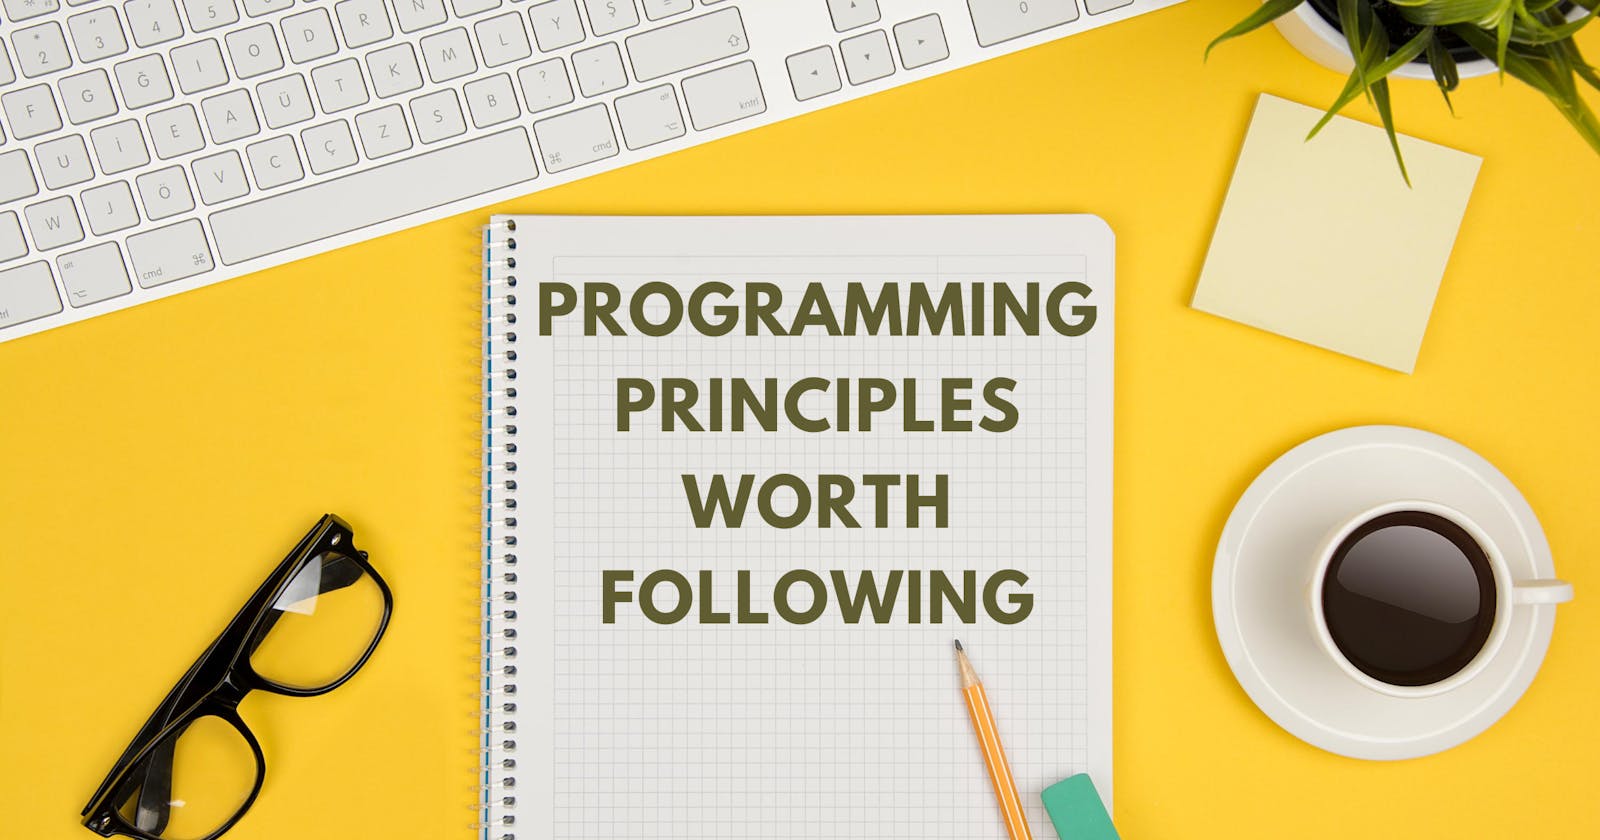 Programming principles worth following